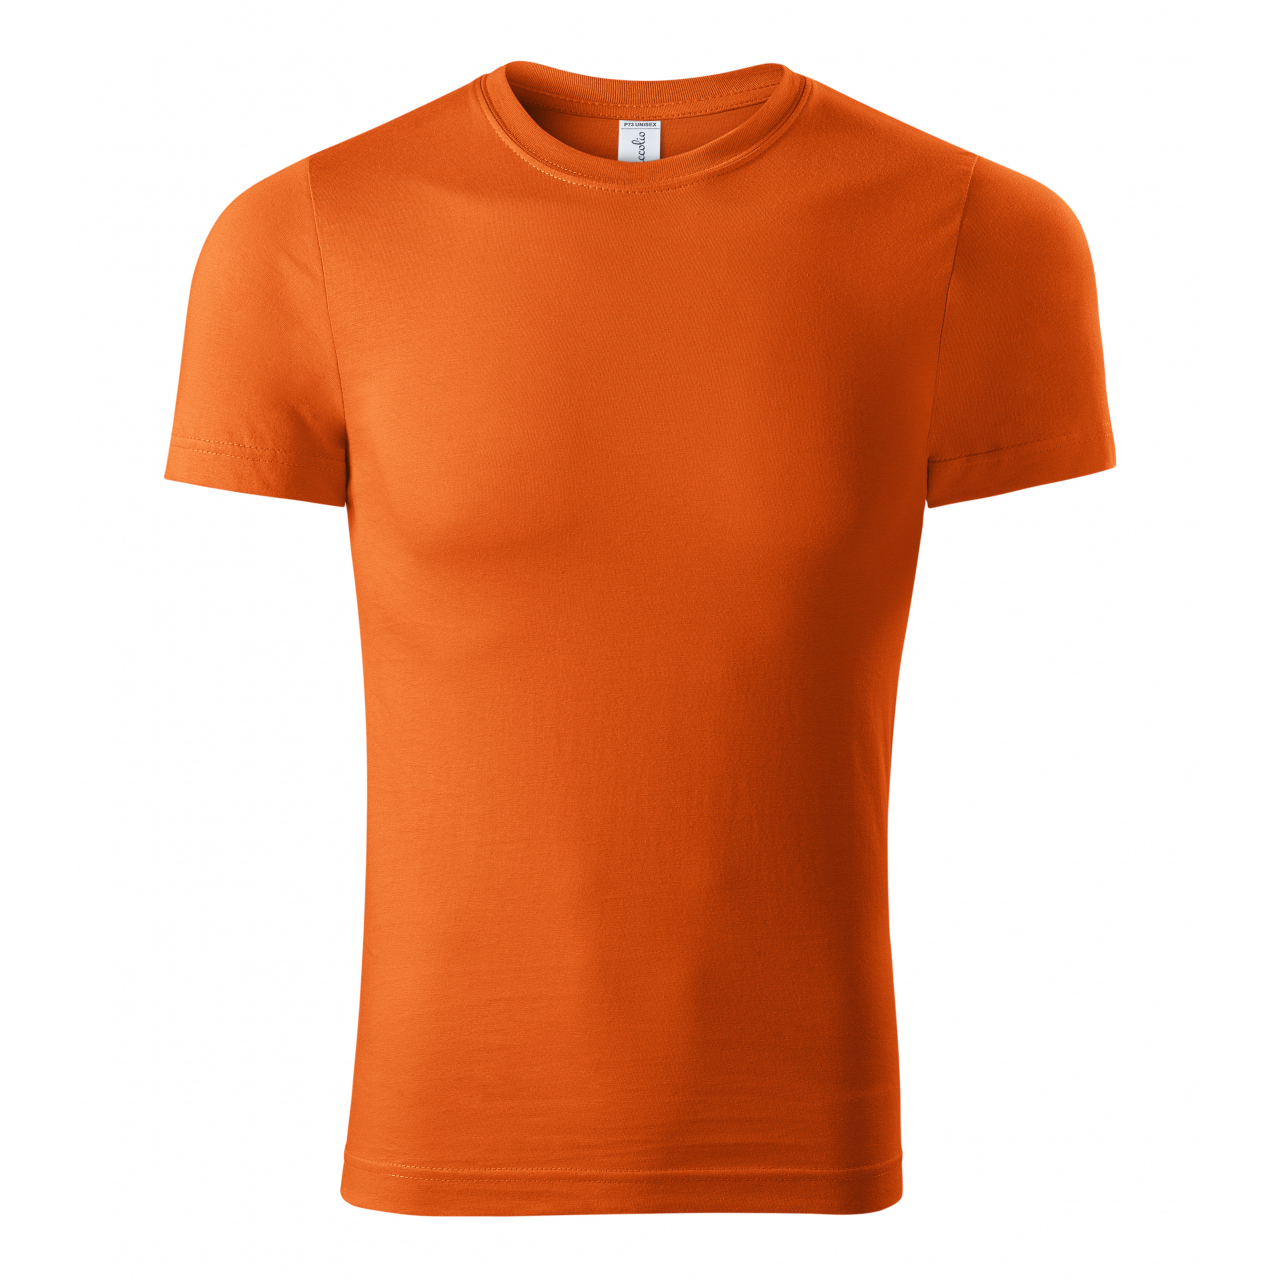 Tričko unisex Piccolio Paint - oranžové, XXL